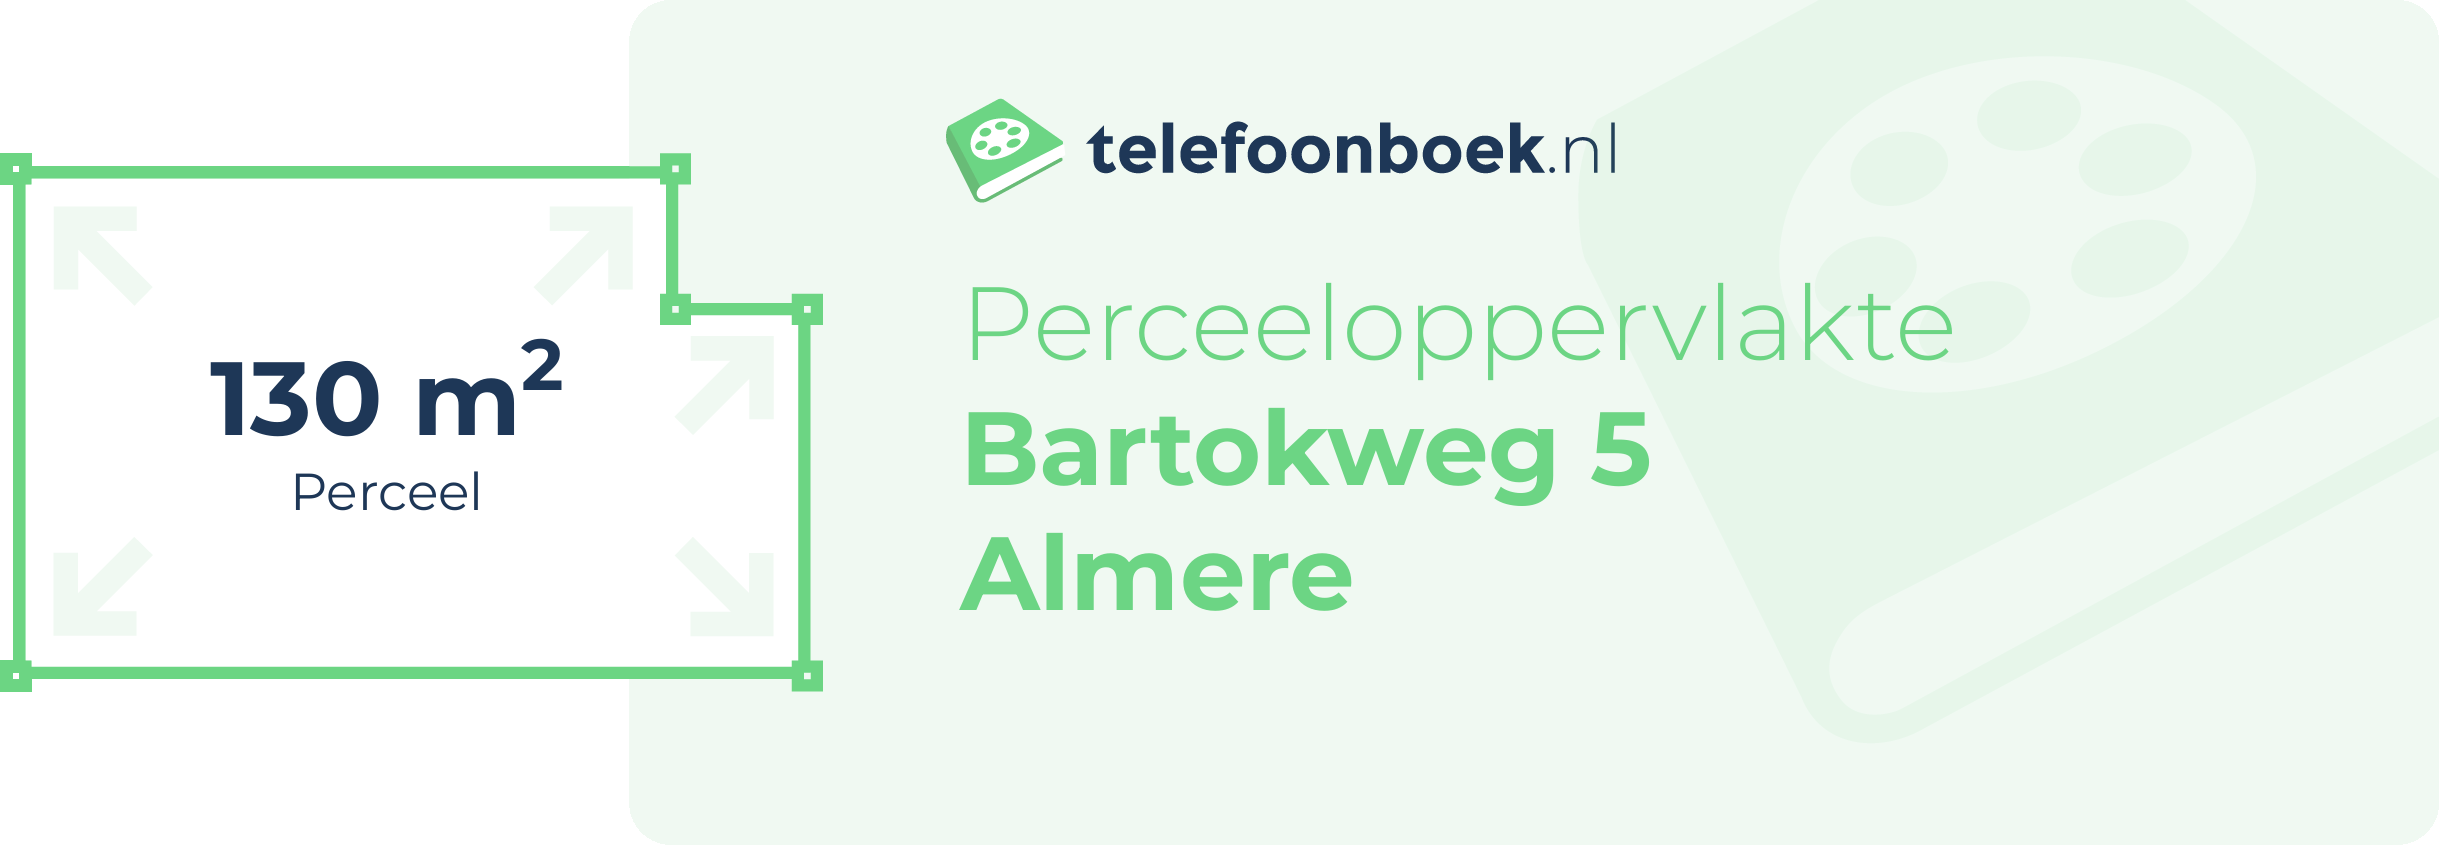 Perceeloppervlakte Bartokweg 5 Almere